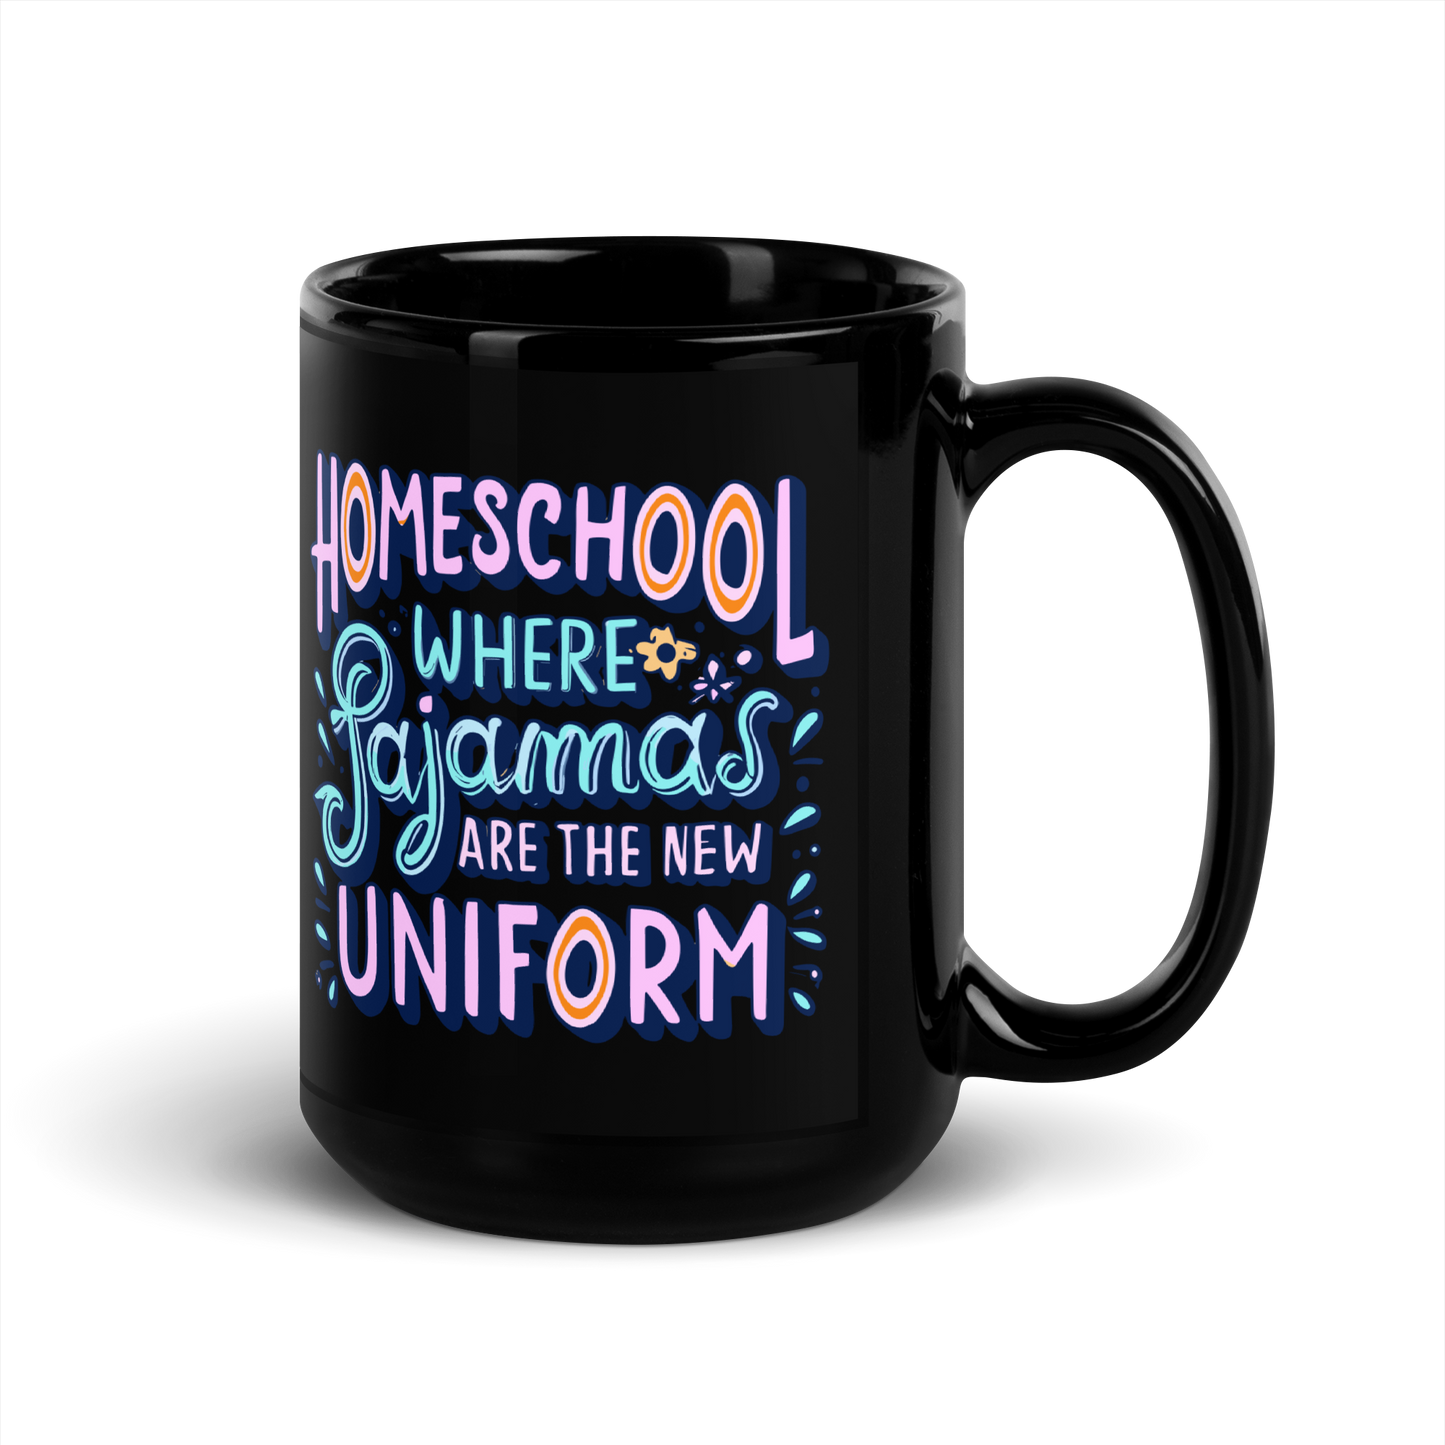 Homeschool Mom Coffee Mug - "Homeschooling Where Pajamas are the New Uniform"